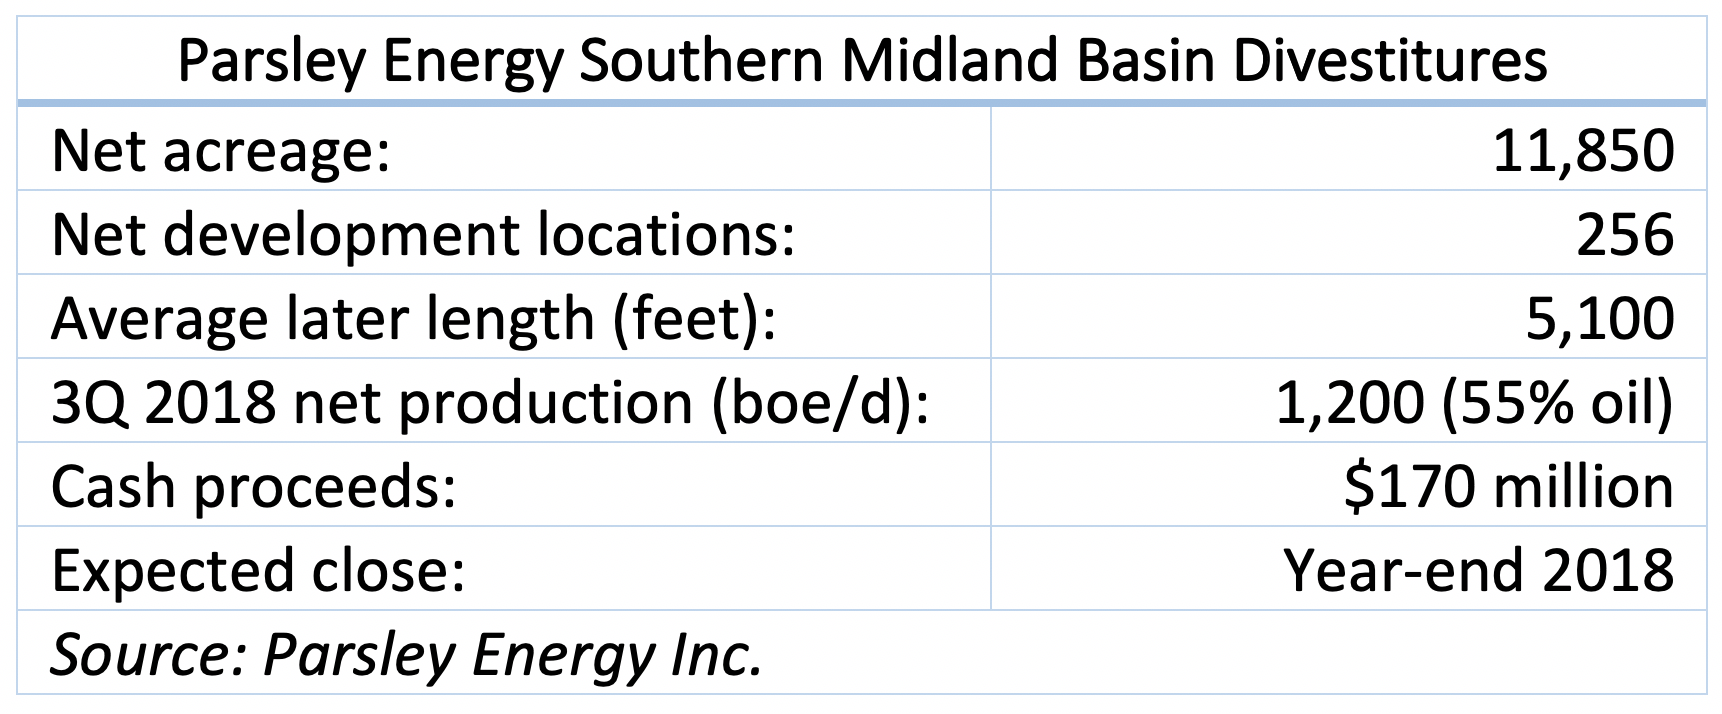 Parsley Energy Southern Midland Basin Divestitures (Source: Parsley Energy Inc.)